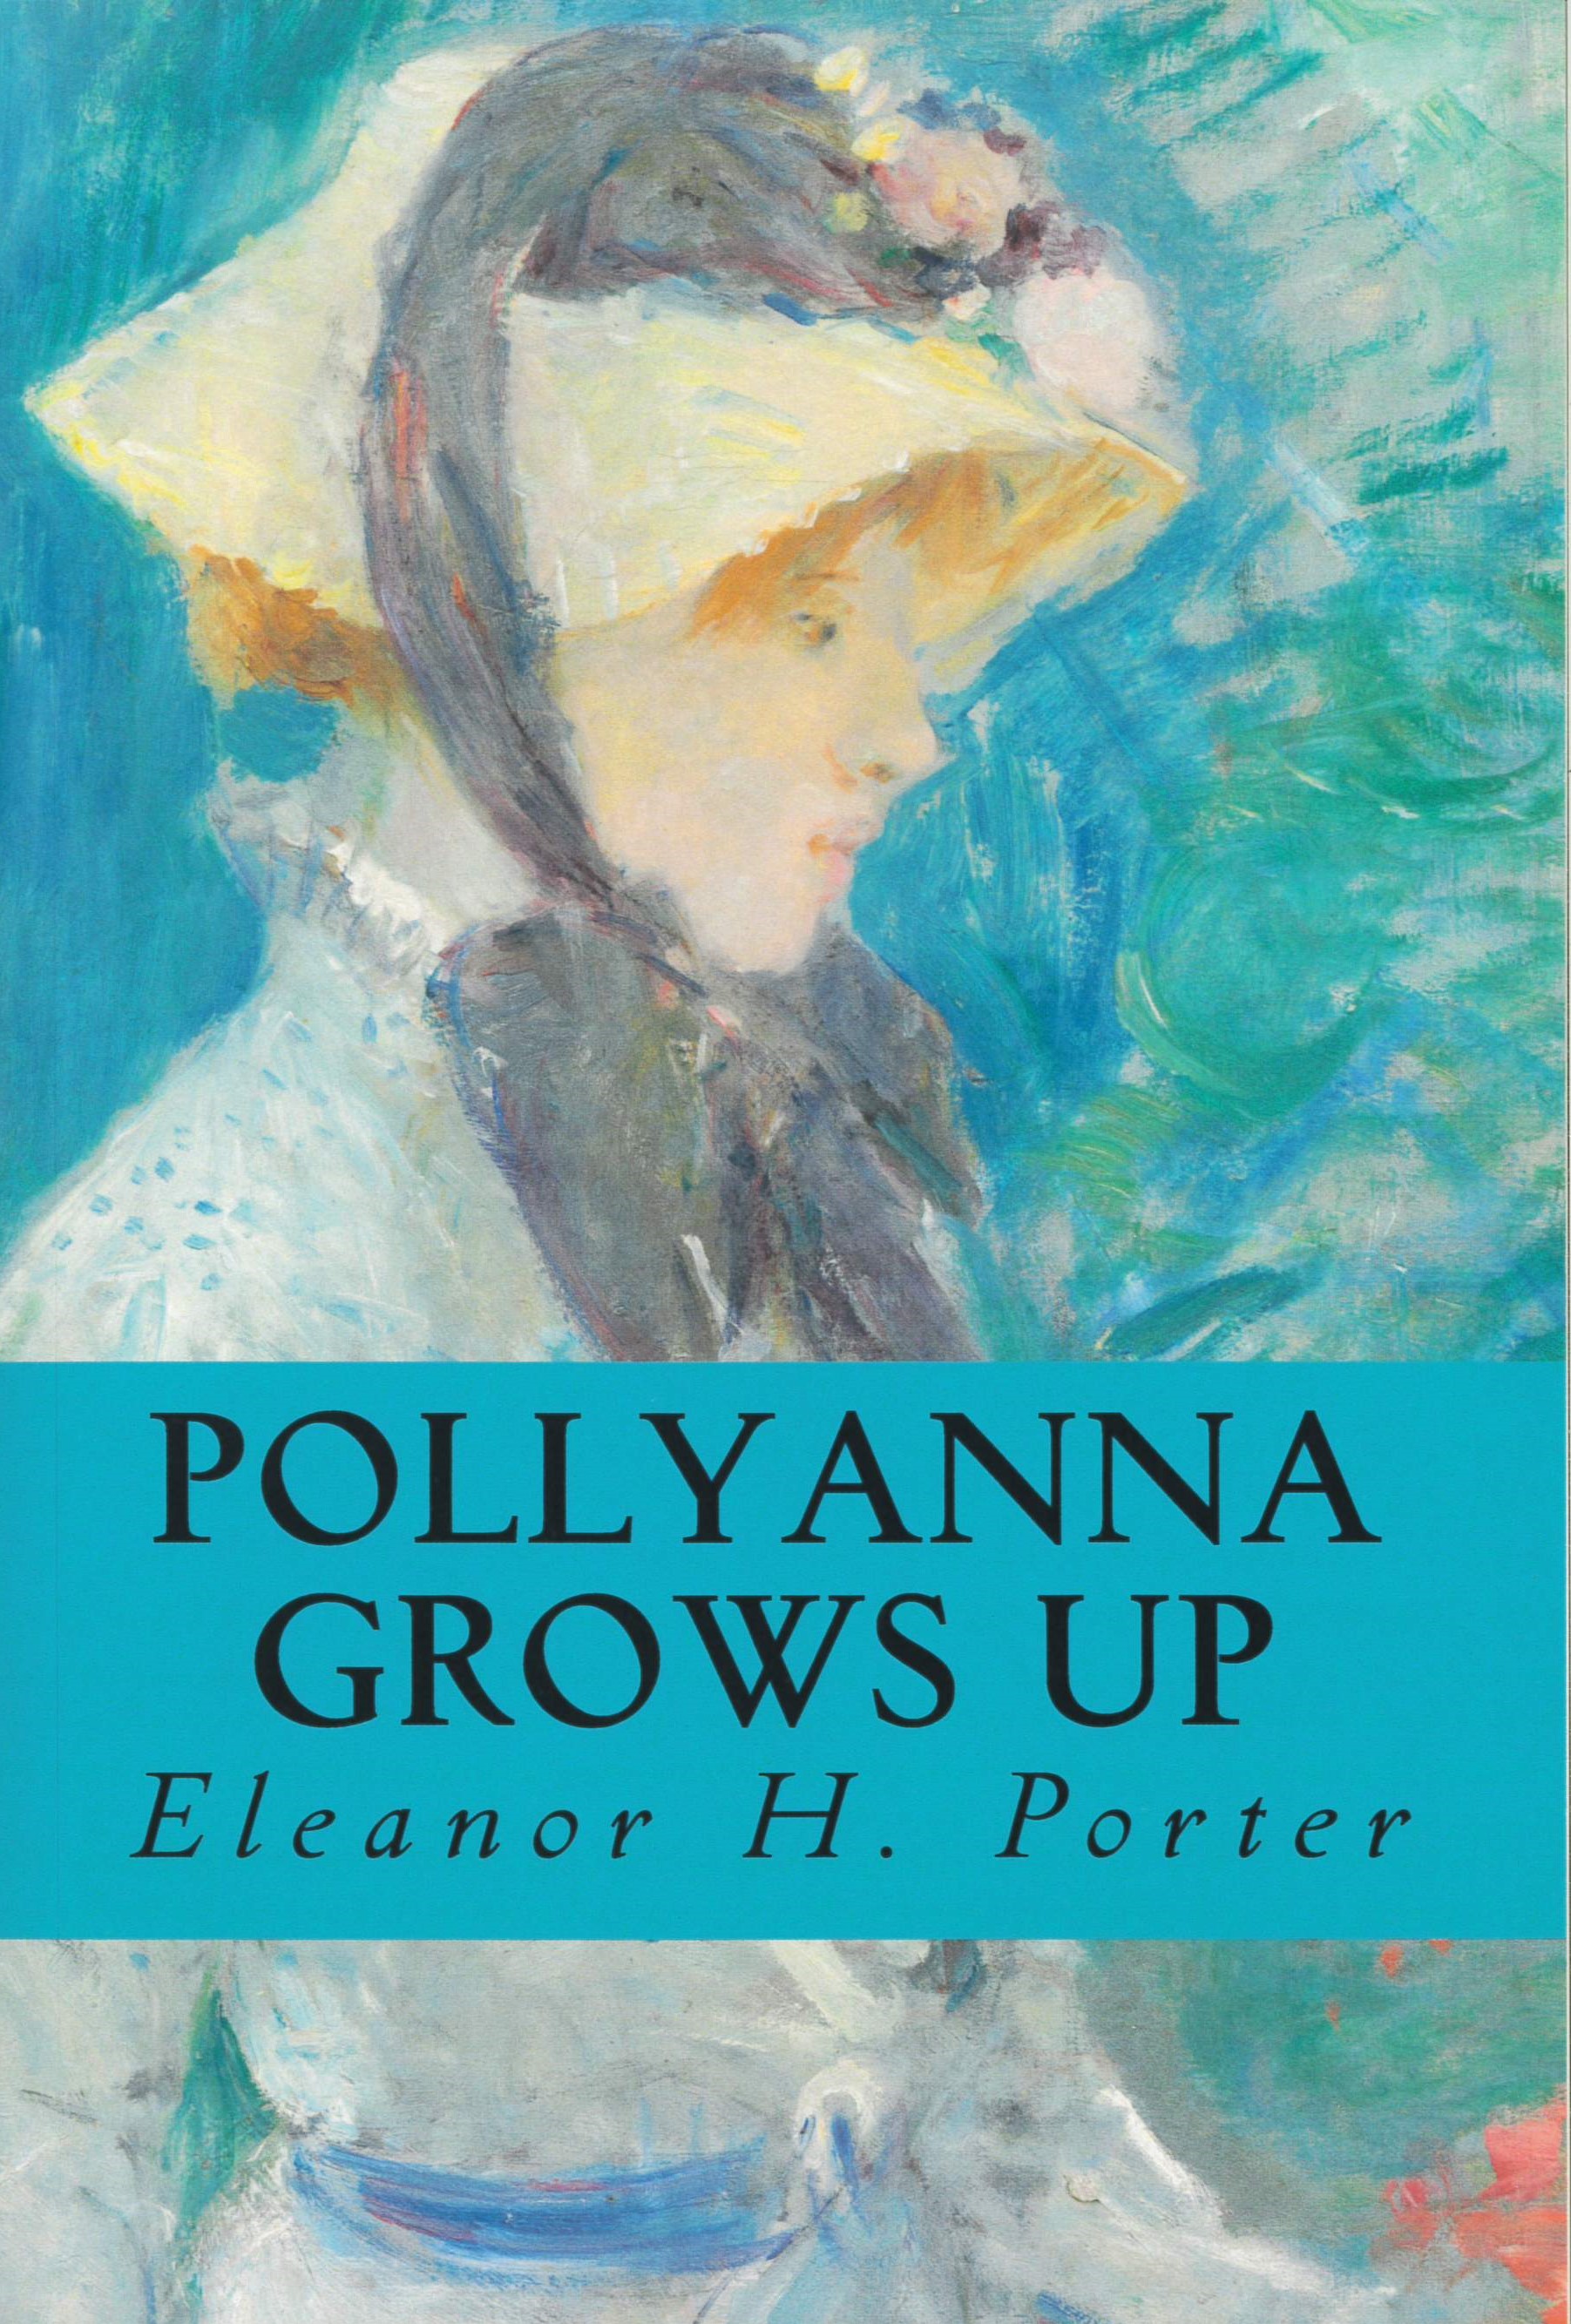 Pollyanna grows up /